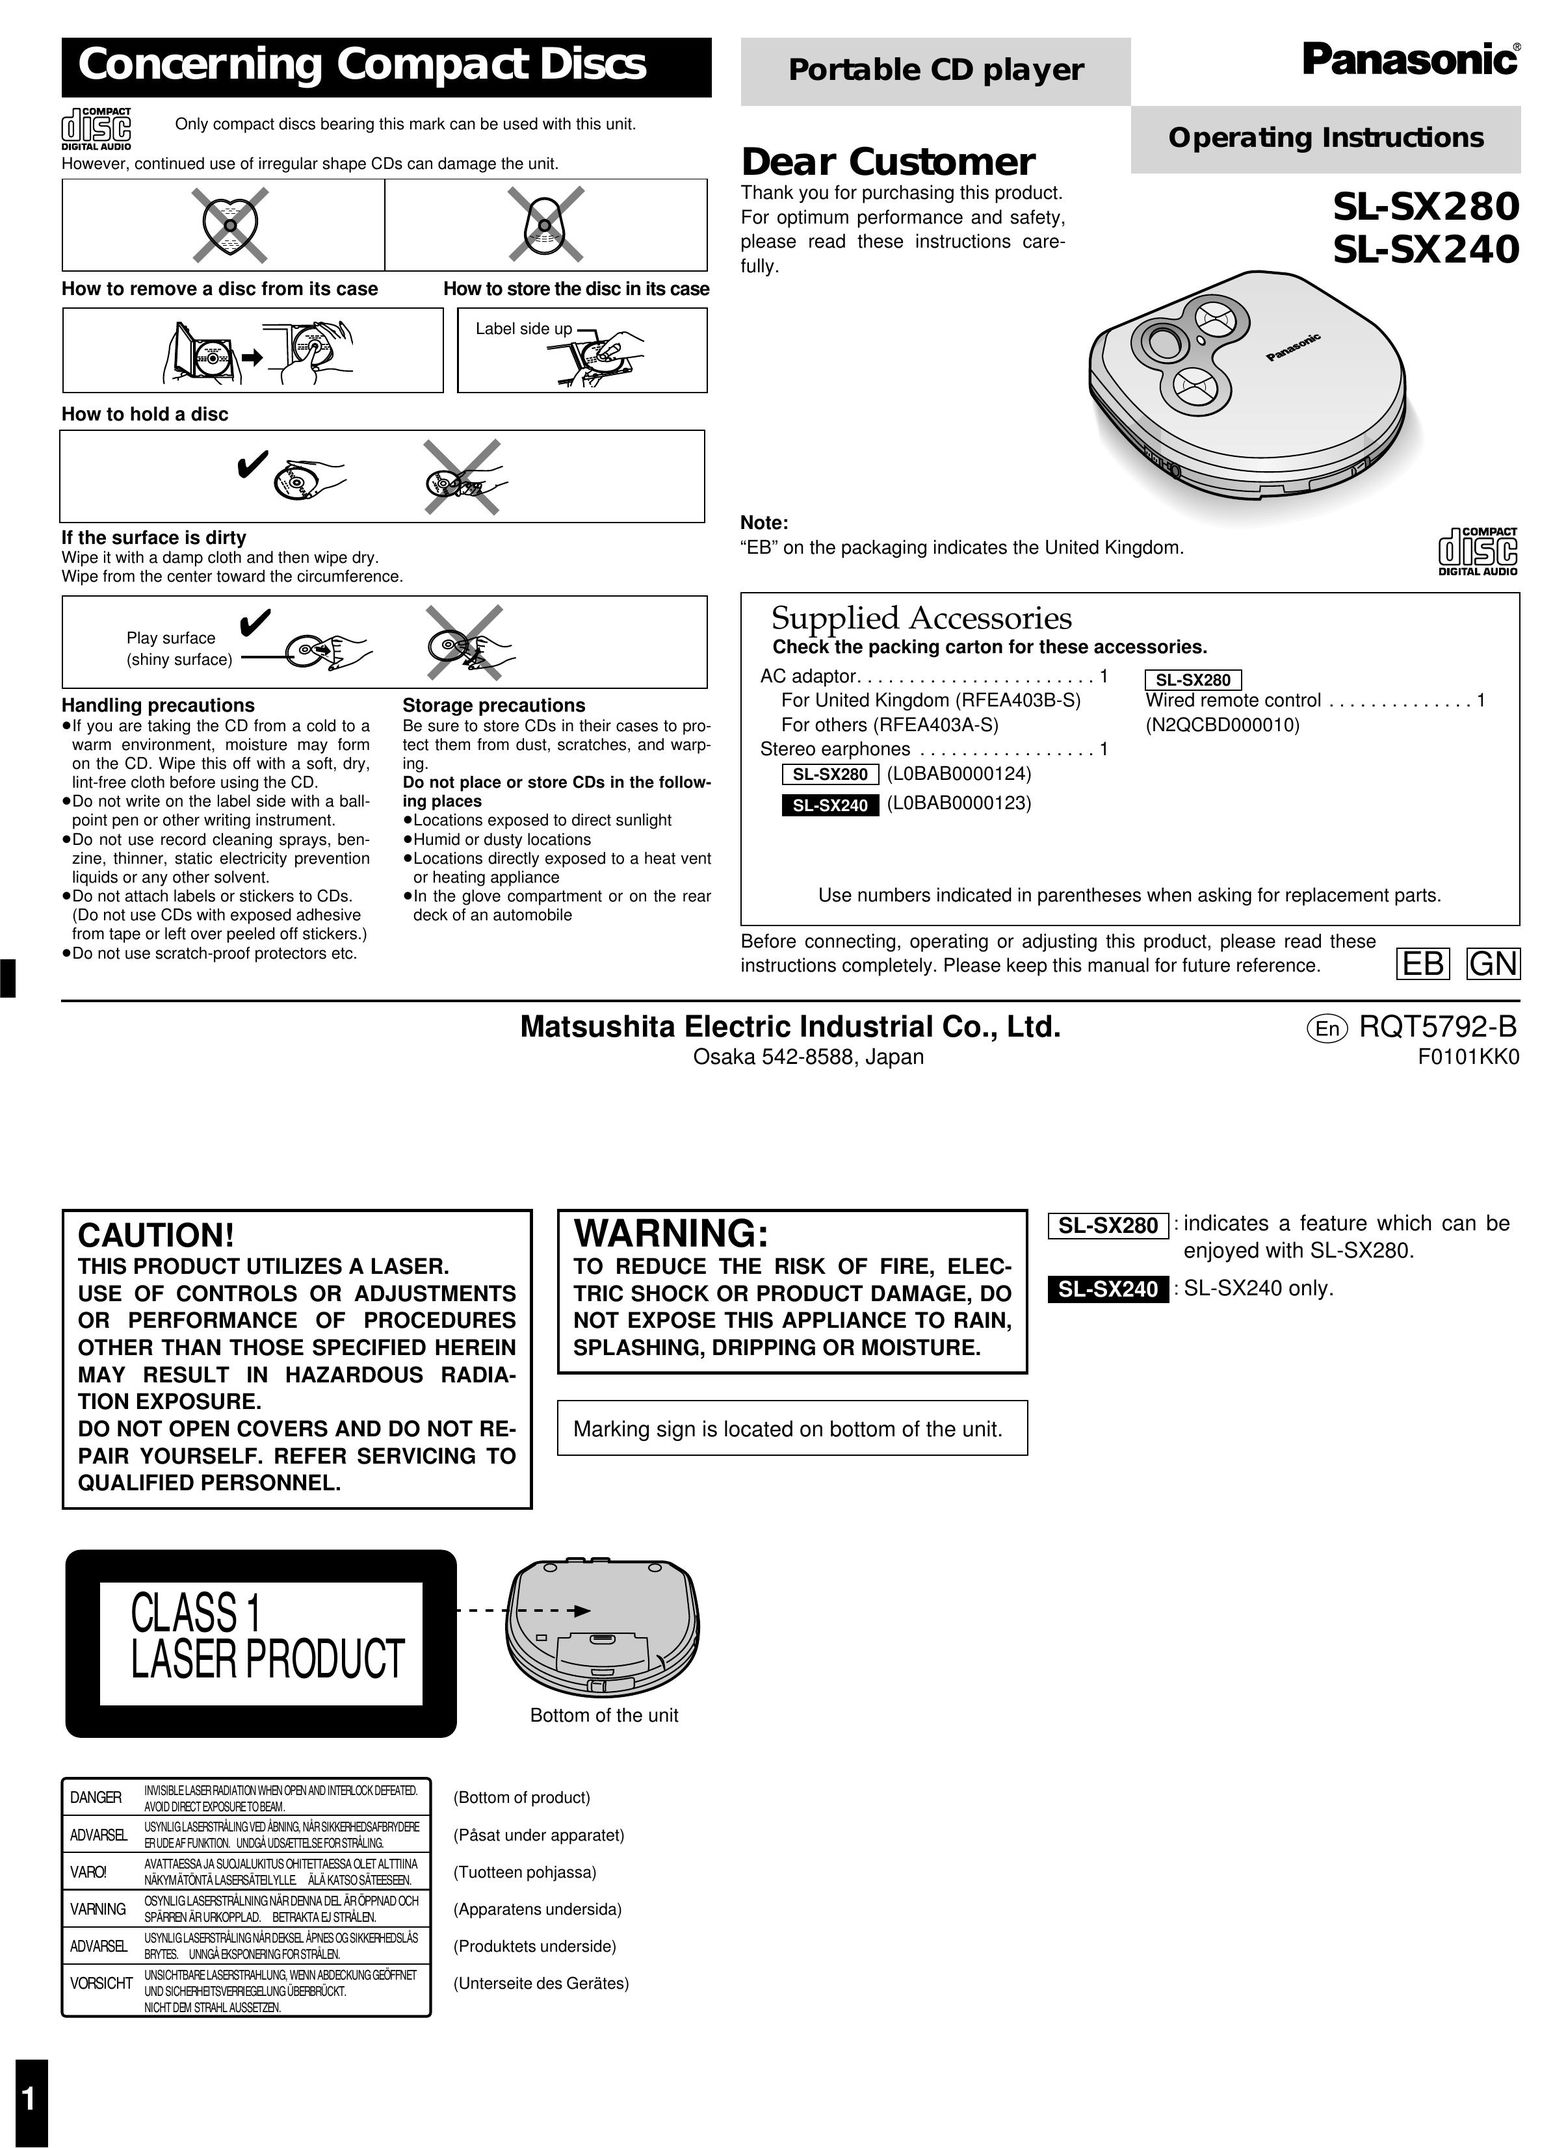 Panasonic SL-SX240 Portable CD Player User Manual